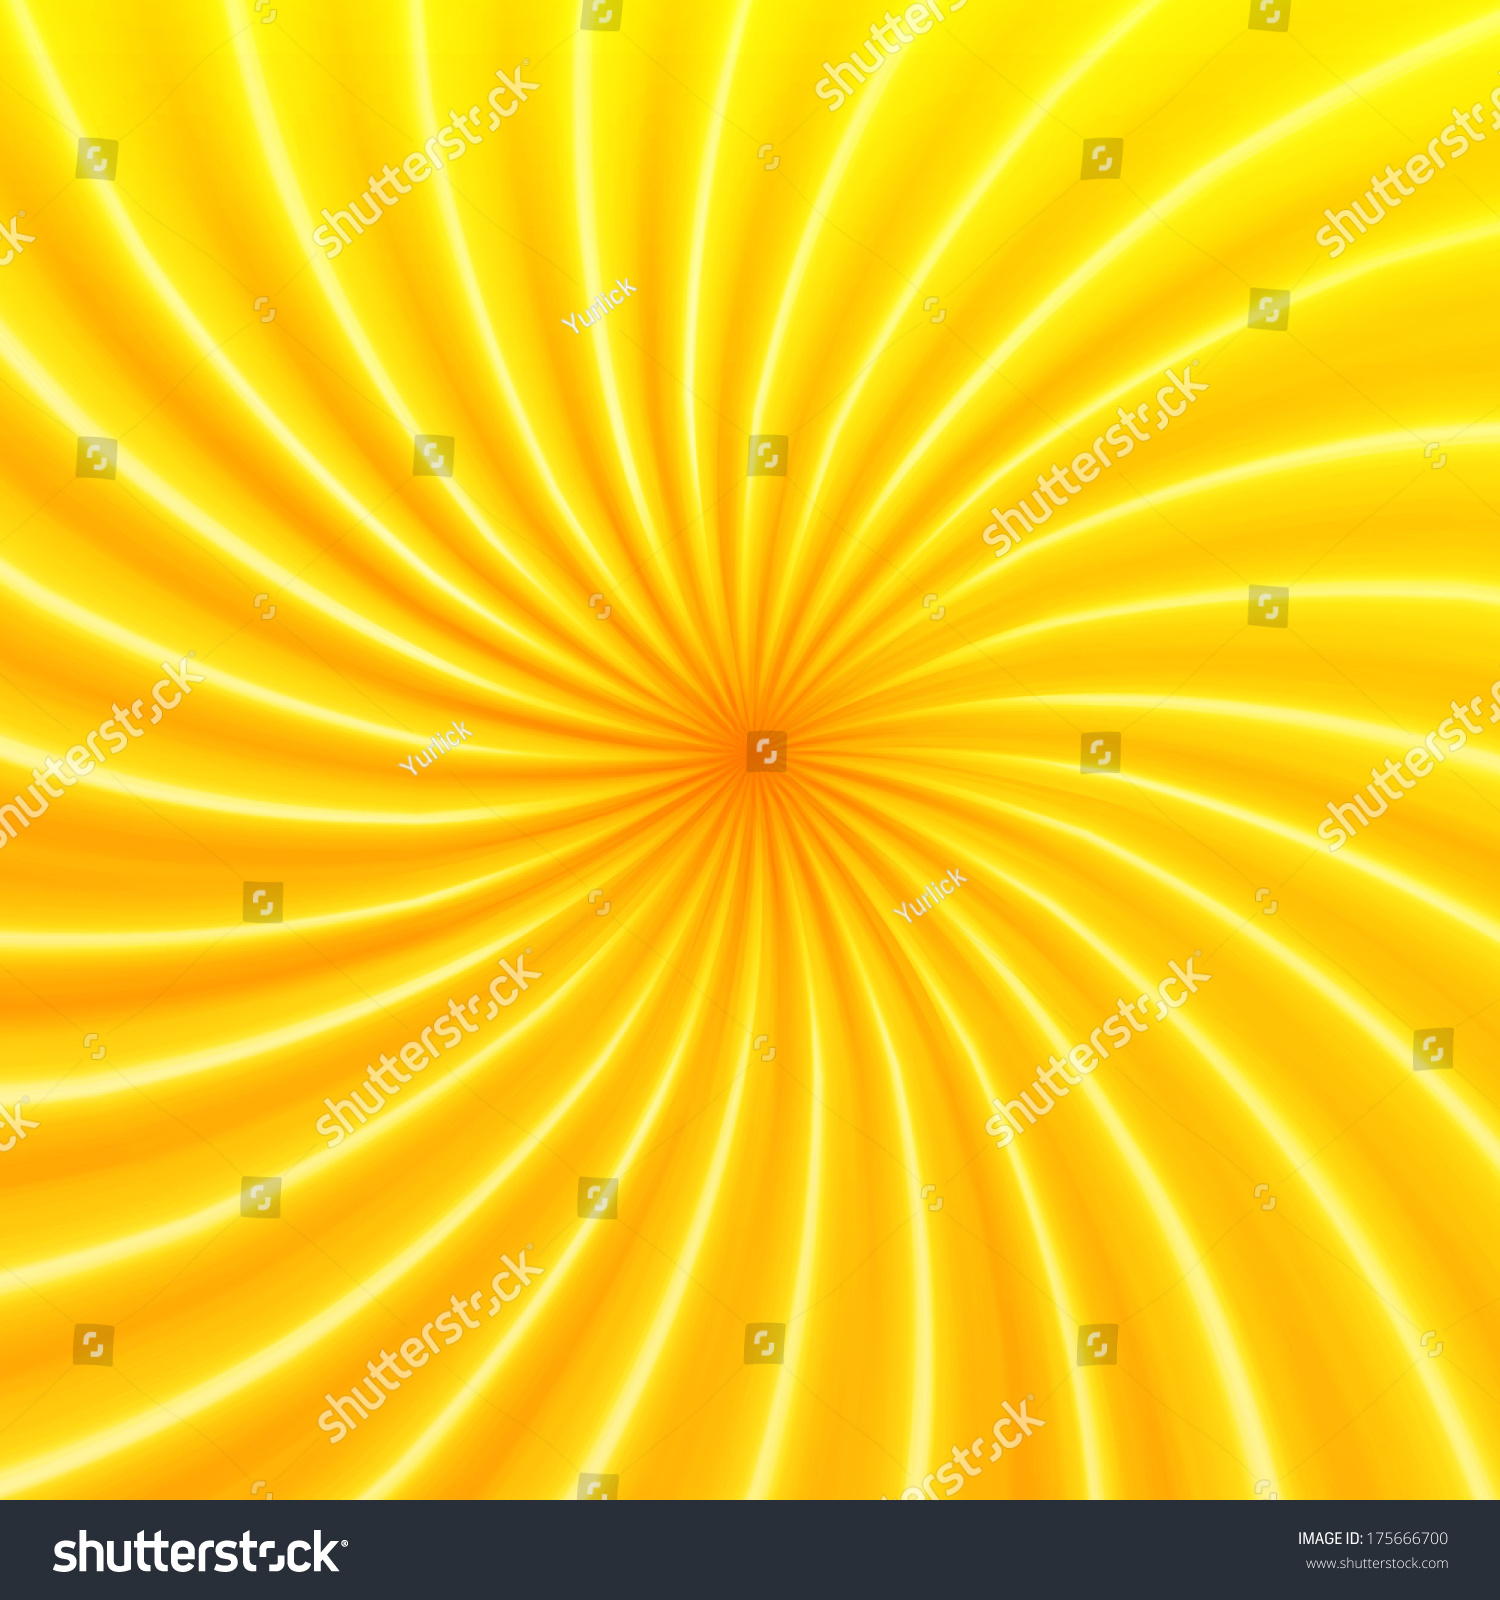 Vector Abstract Background Sunbeams Stock Photo (Photo, Vector ...